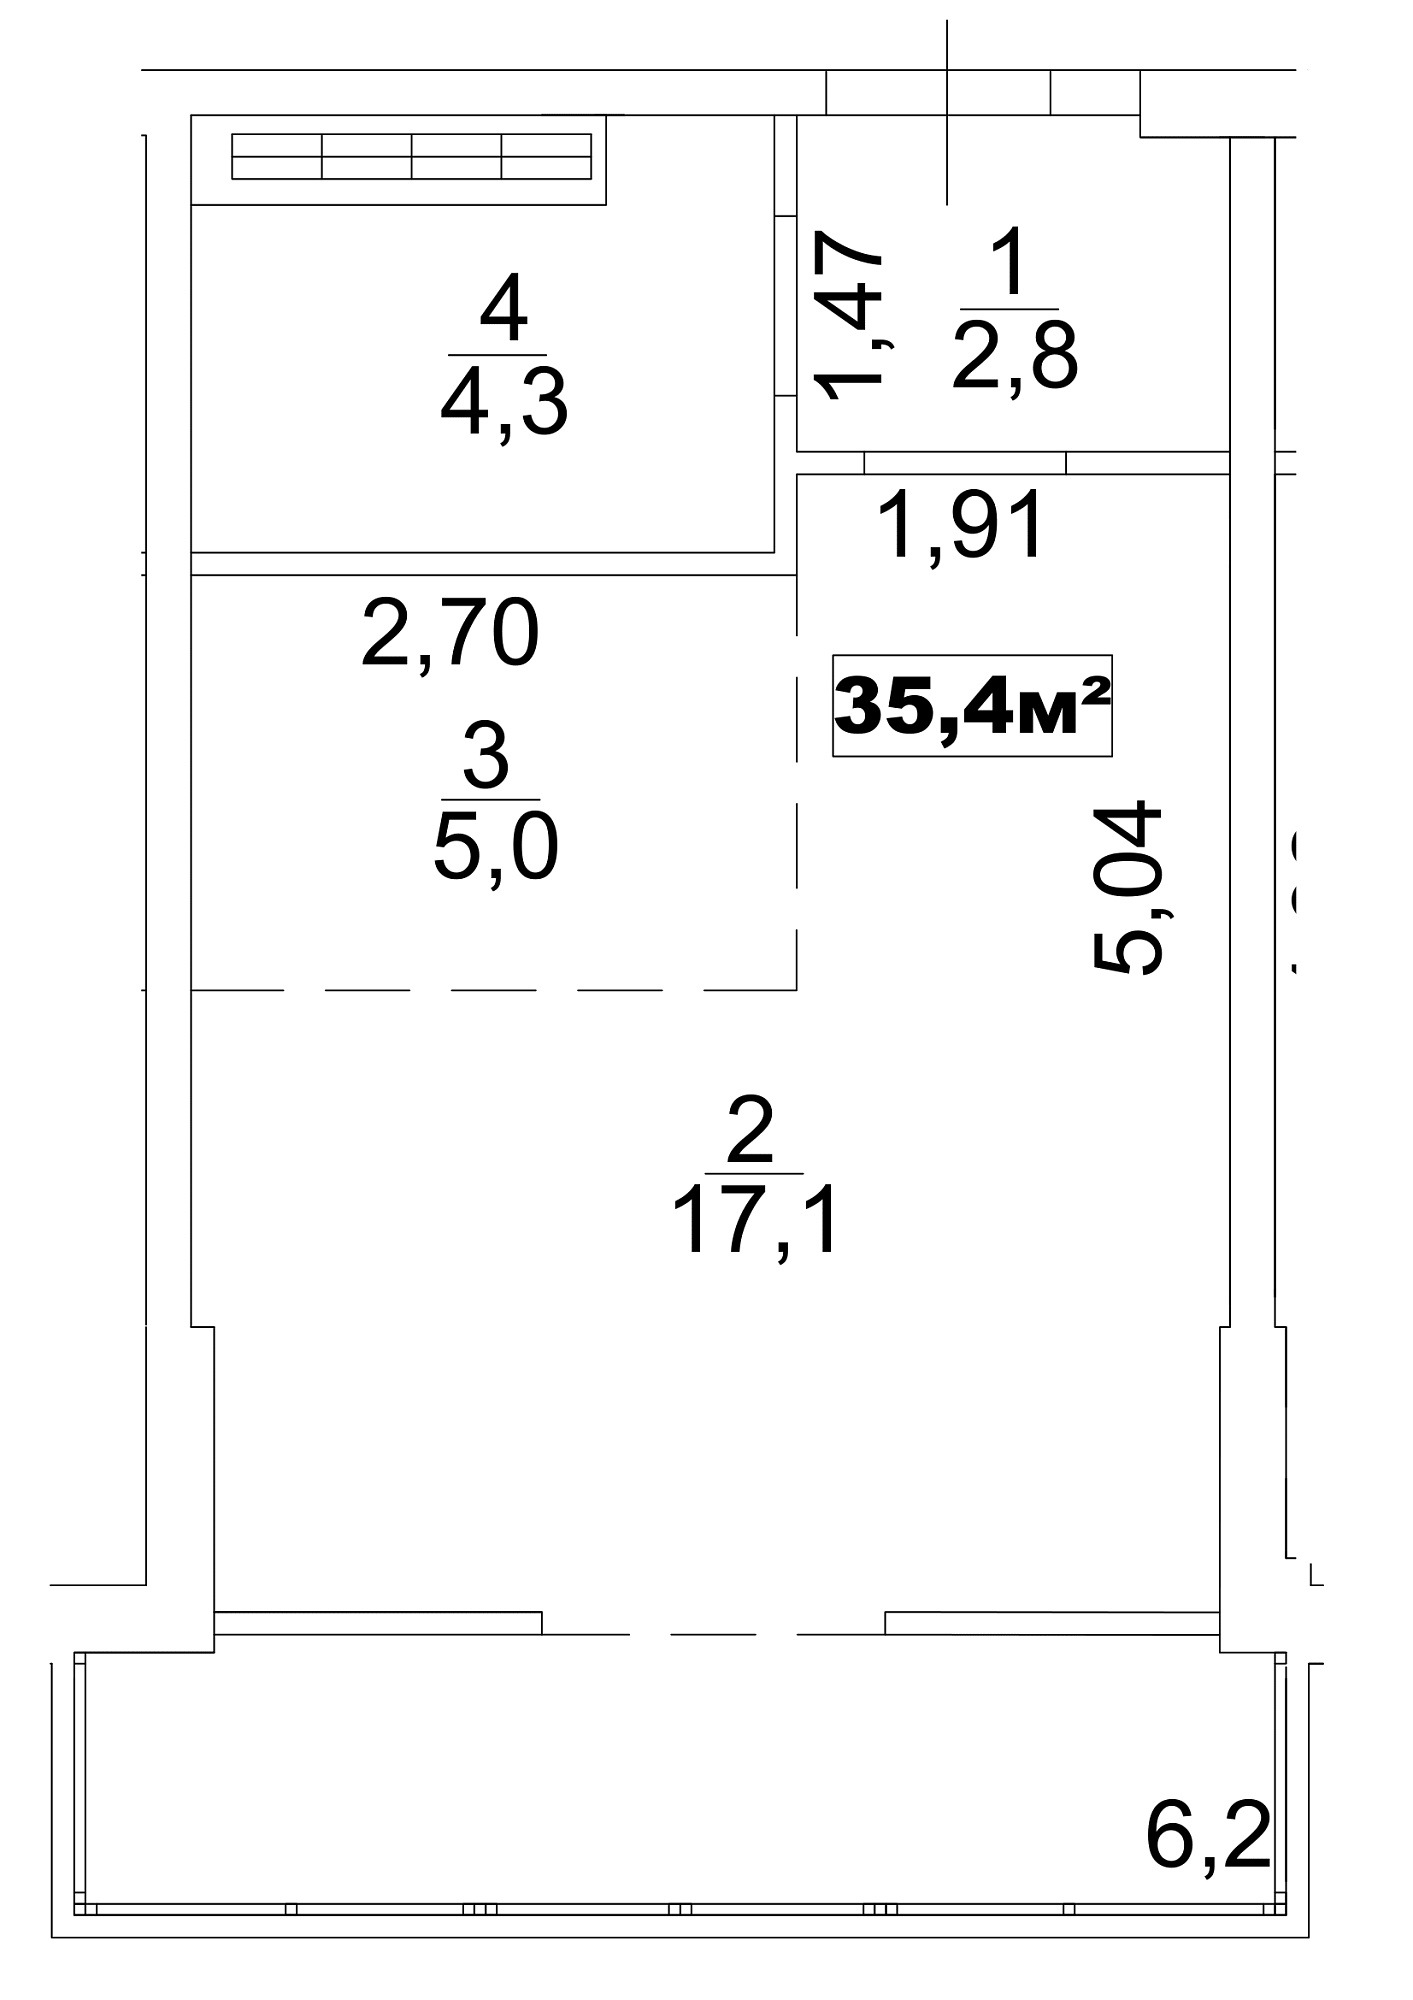 Планировка Smart-квартира площей 35.4м2, AB-13-05/0034б.